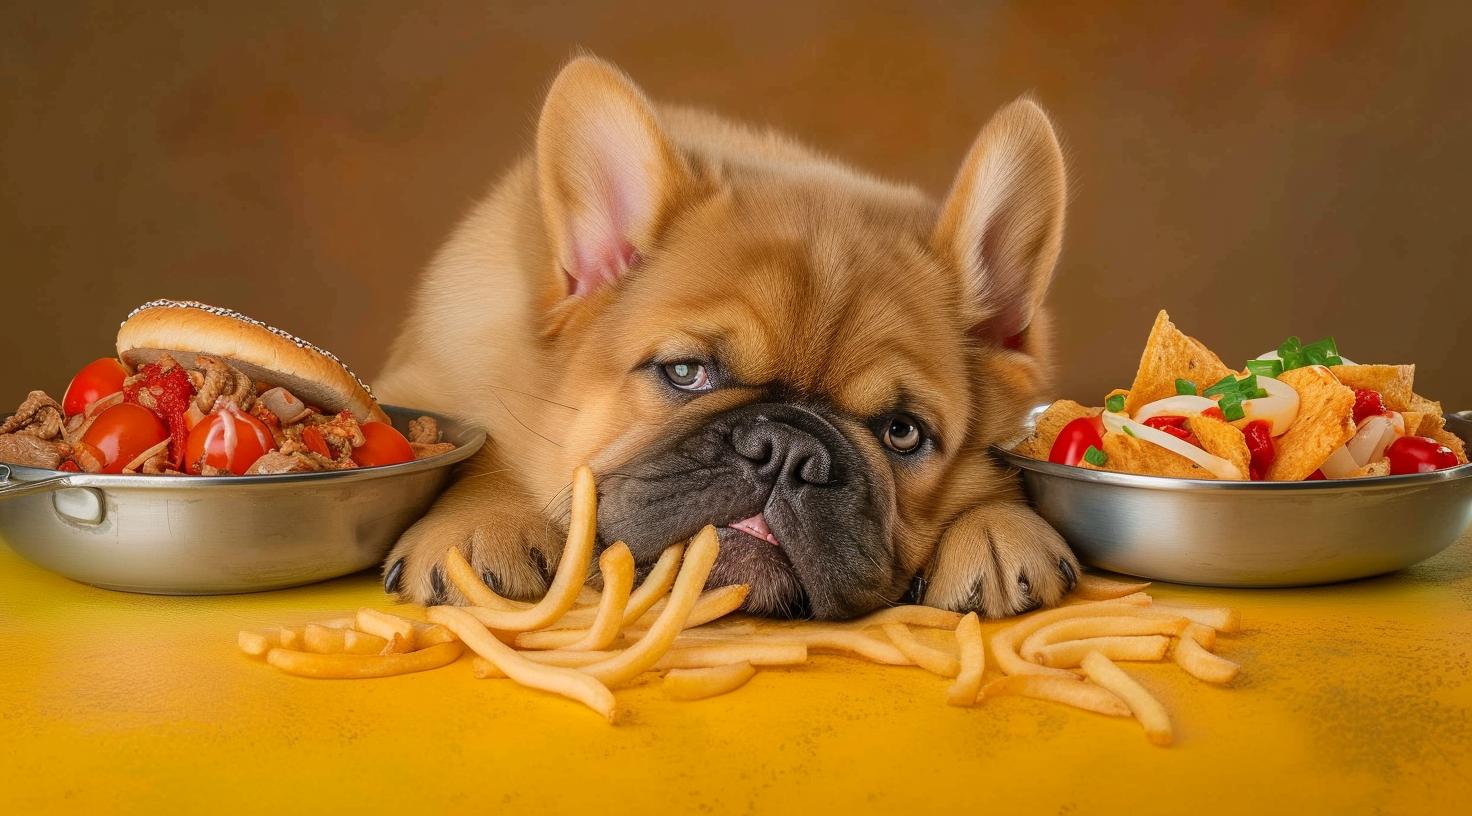 Achtung – Giftige Lebensmittel für Hunde